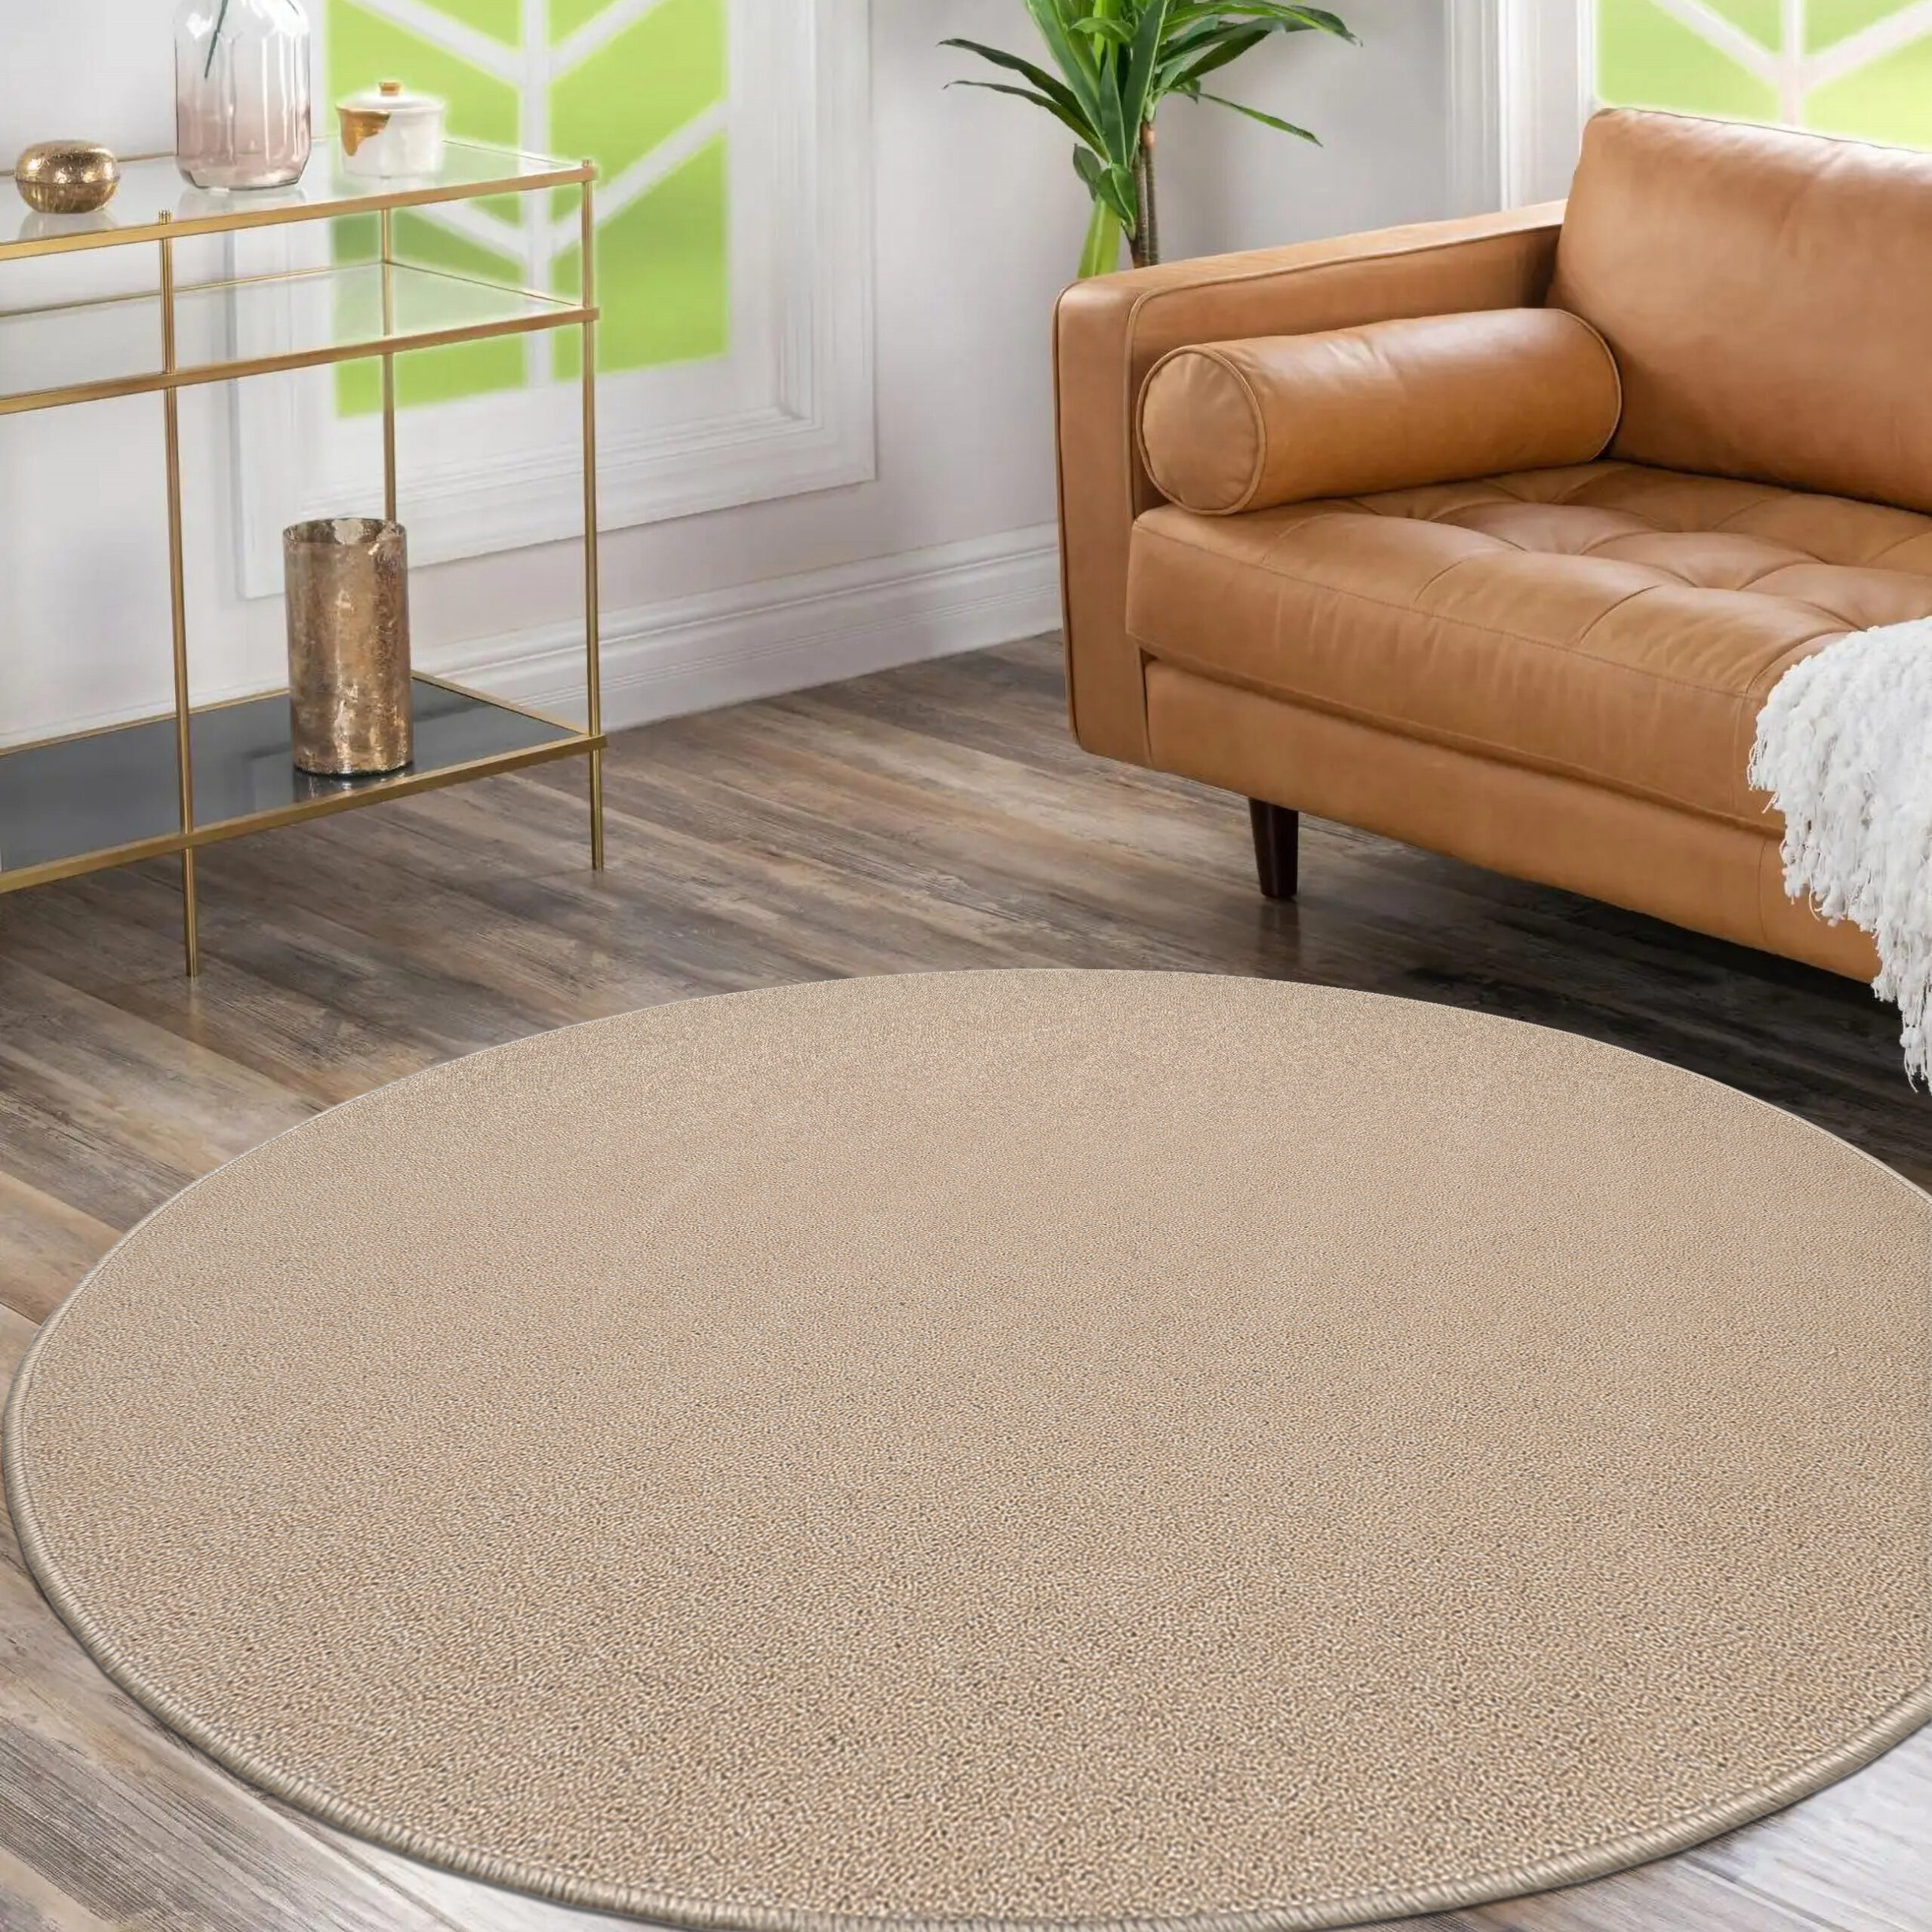 Modern living room area rug design. Interior room rug sofa chair